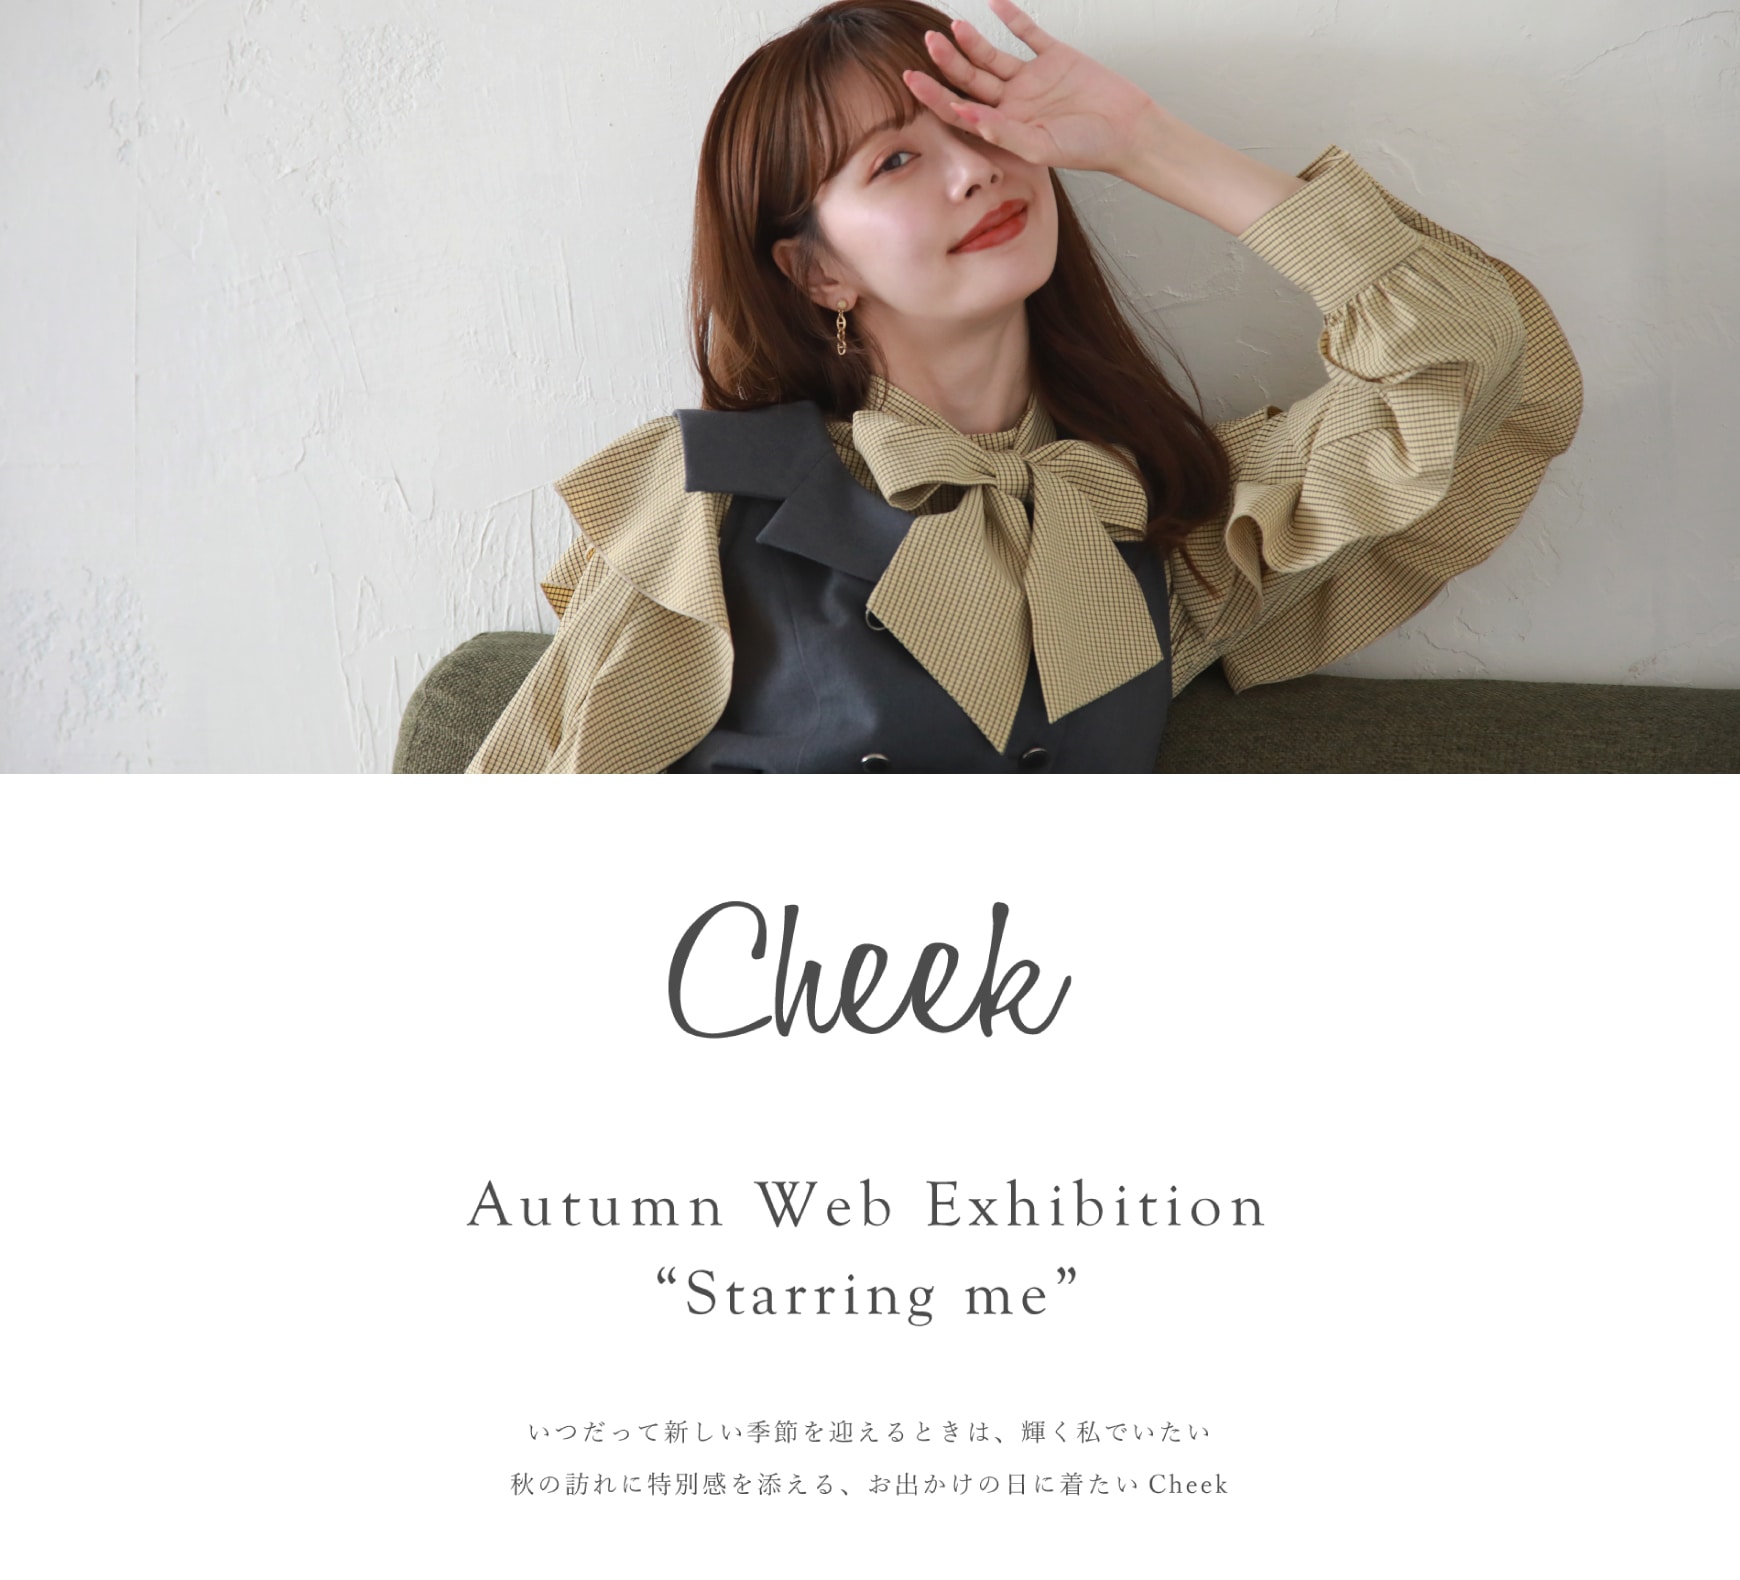 Autumn Web Exhibition